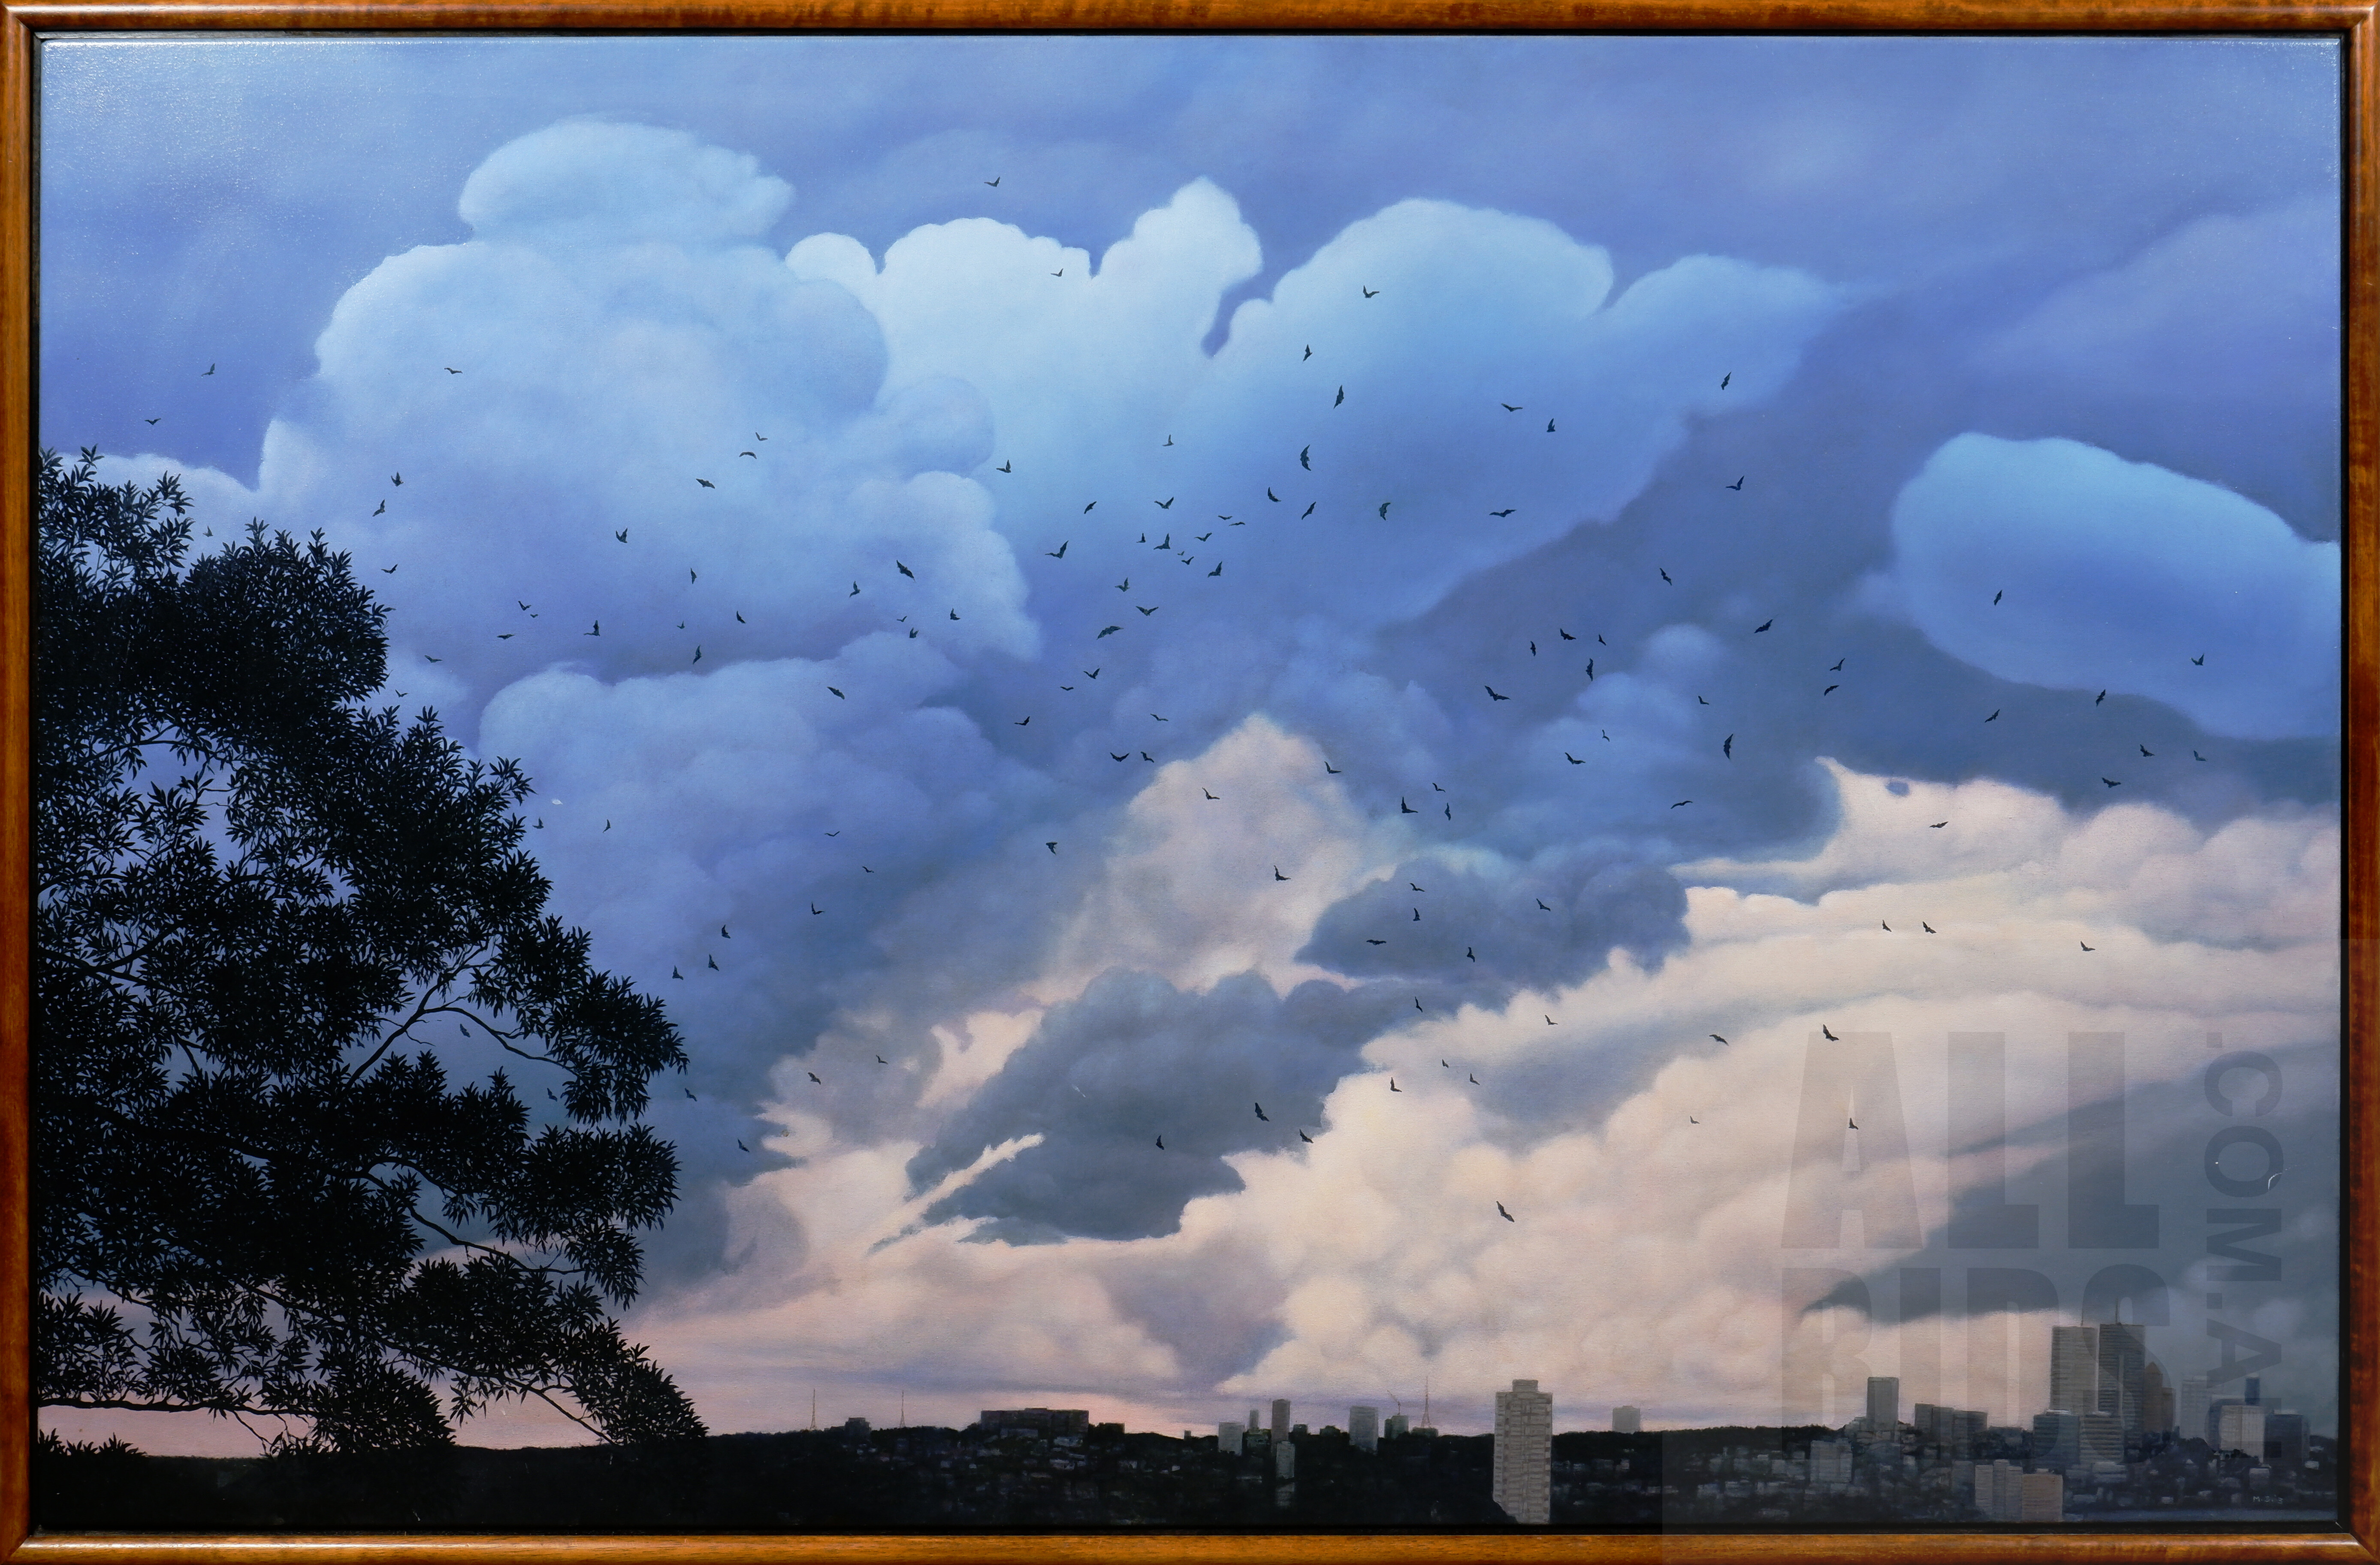 'Michael Schlieper (born 1947), Crossing the Harbour 2003, Oil on Canvas, 107 x 167 cm'